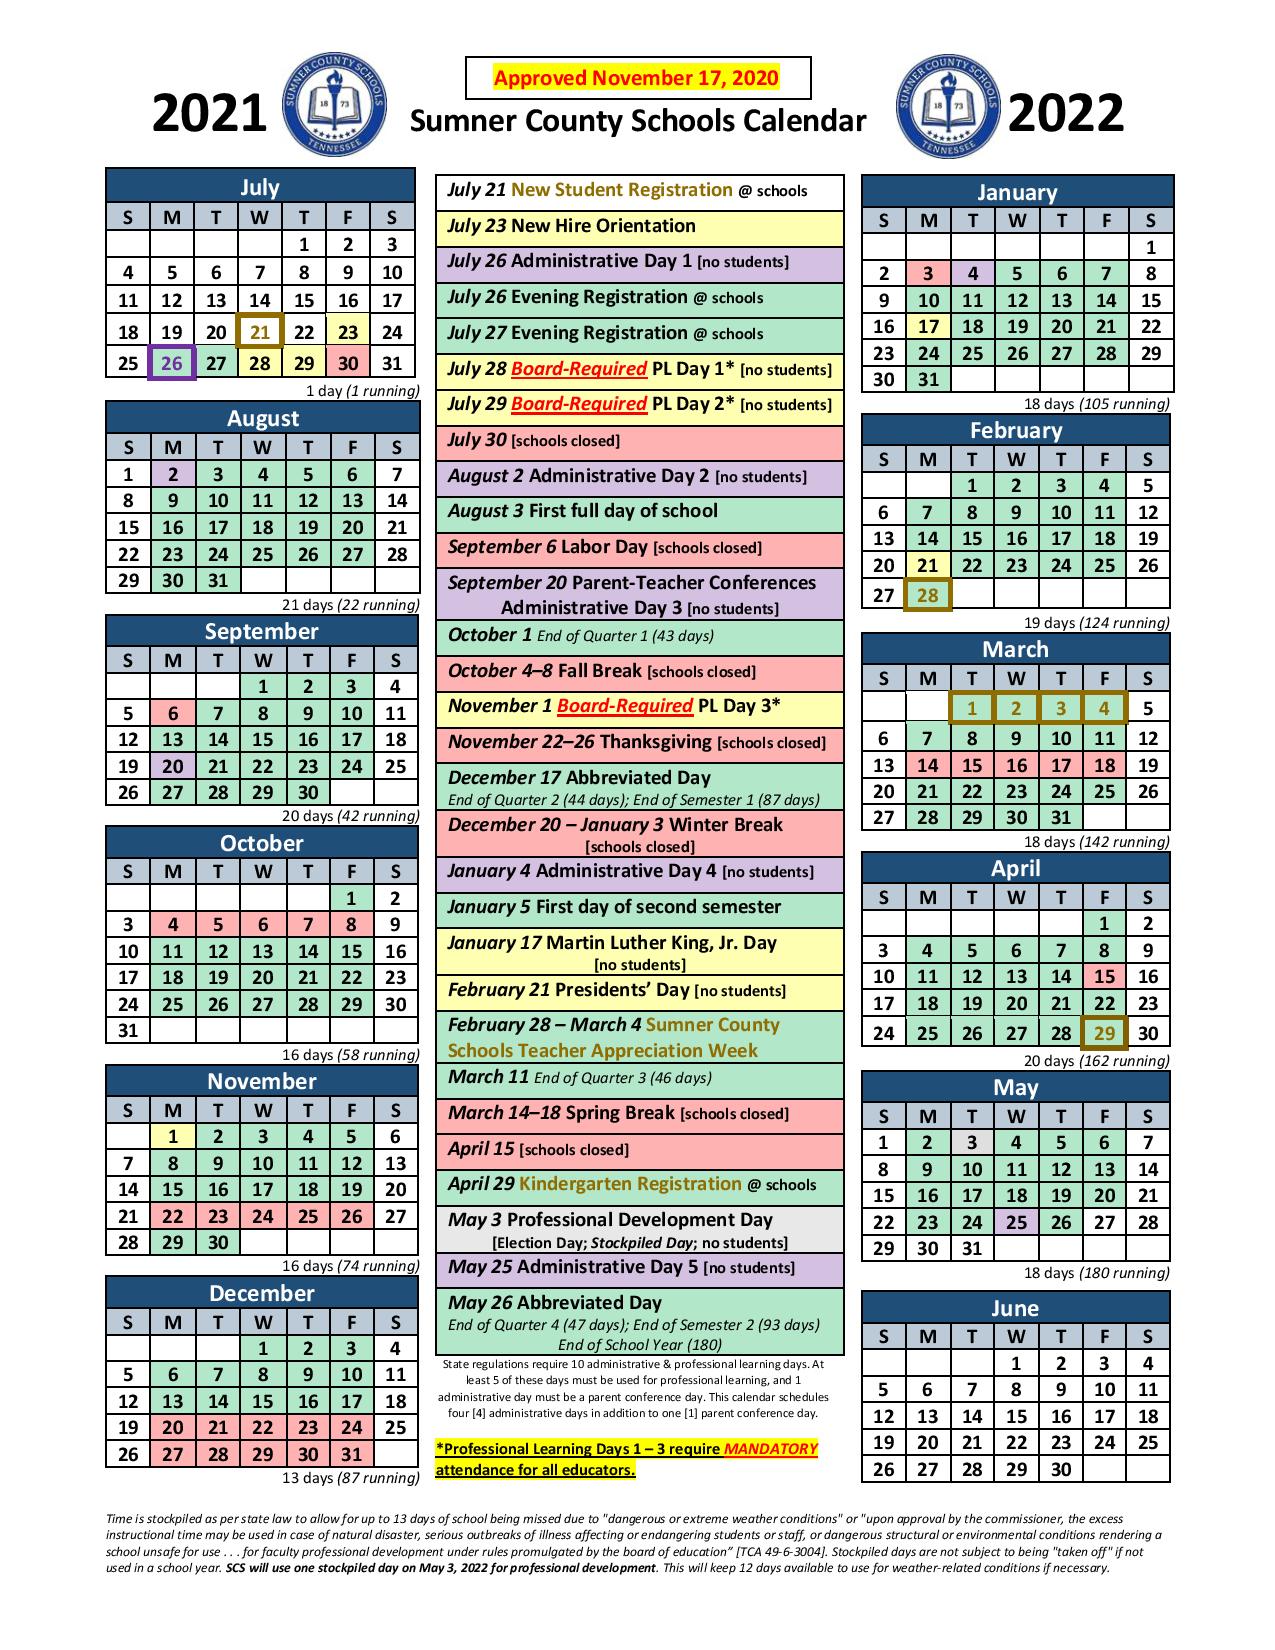 Sumner County School Calendar Holidays 2021-2022